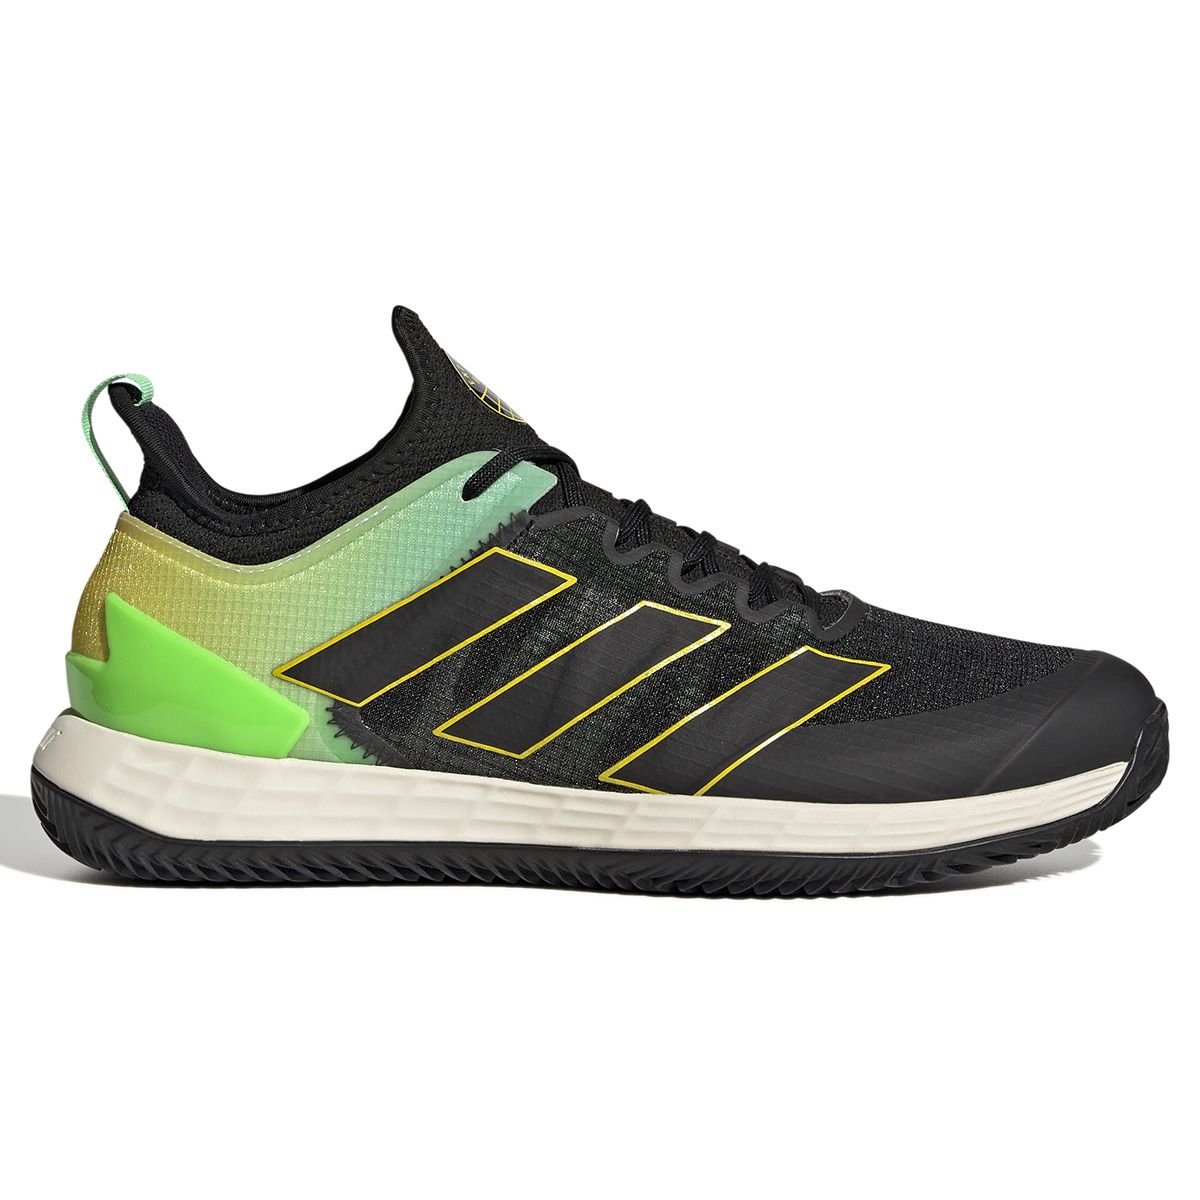 adidas Adizero Ubersonic 4 Men's Tennis Shoes Clay GY4004